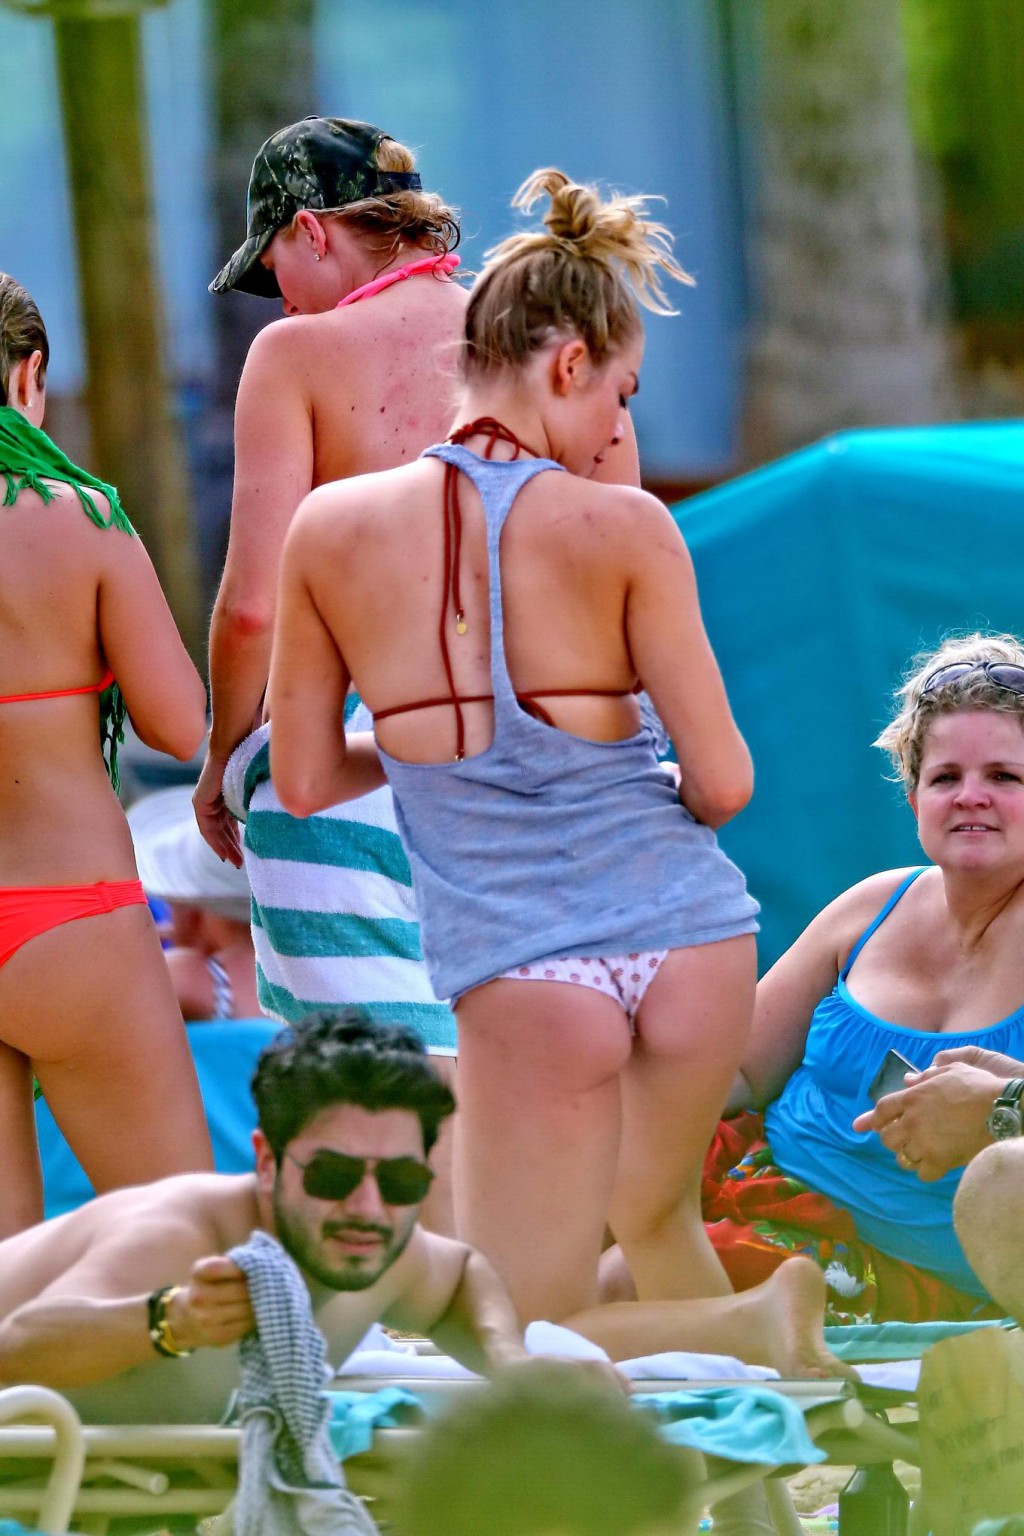 Leann rimes en bikini bronceándose en una playa de hawaii
 #75203331